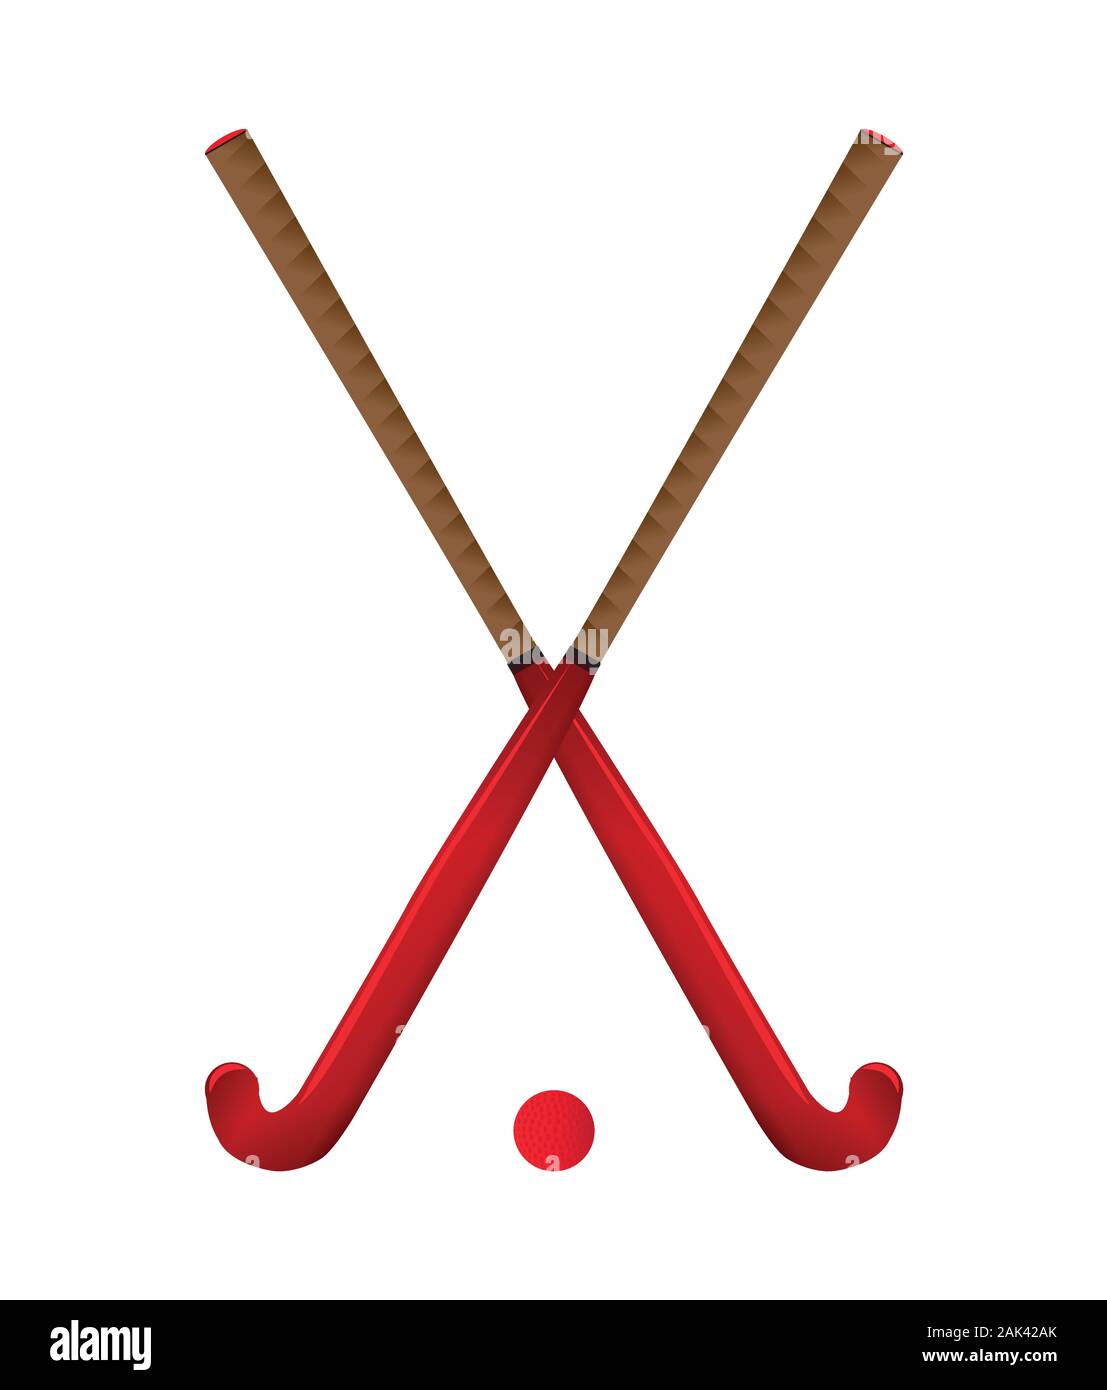 Field field hockey Stock Vector Images - Alamy